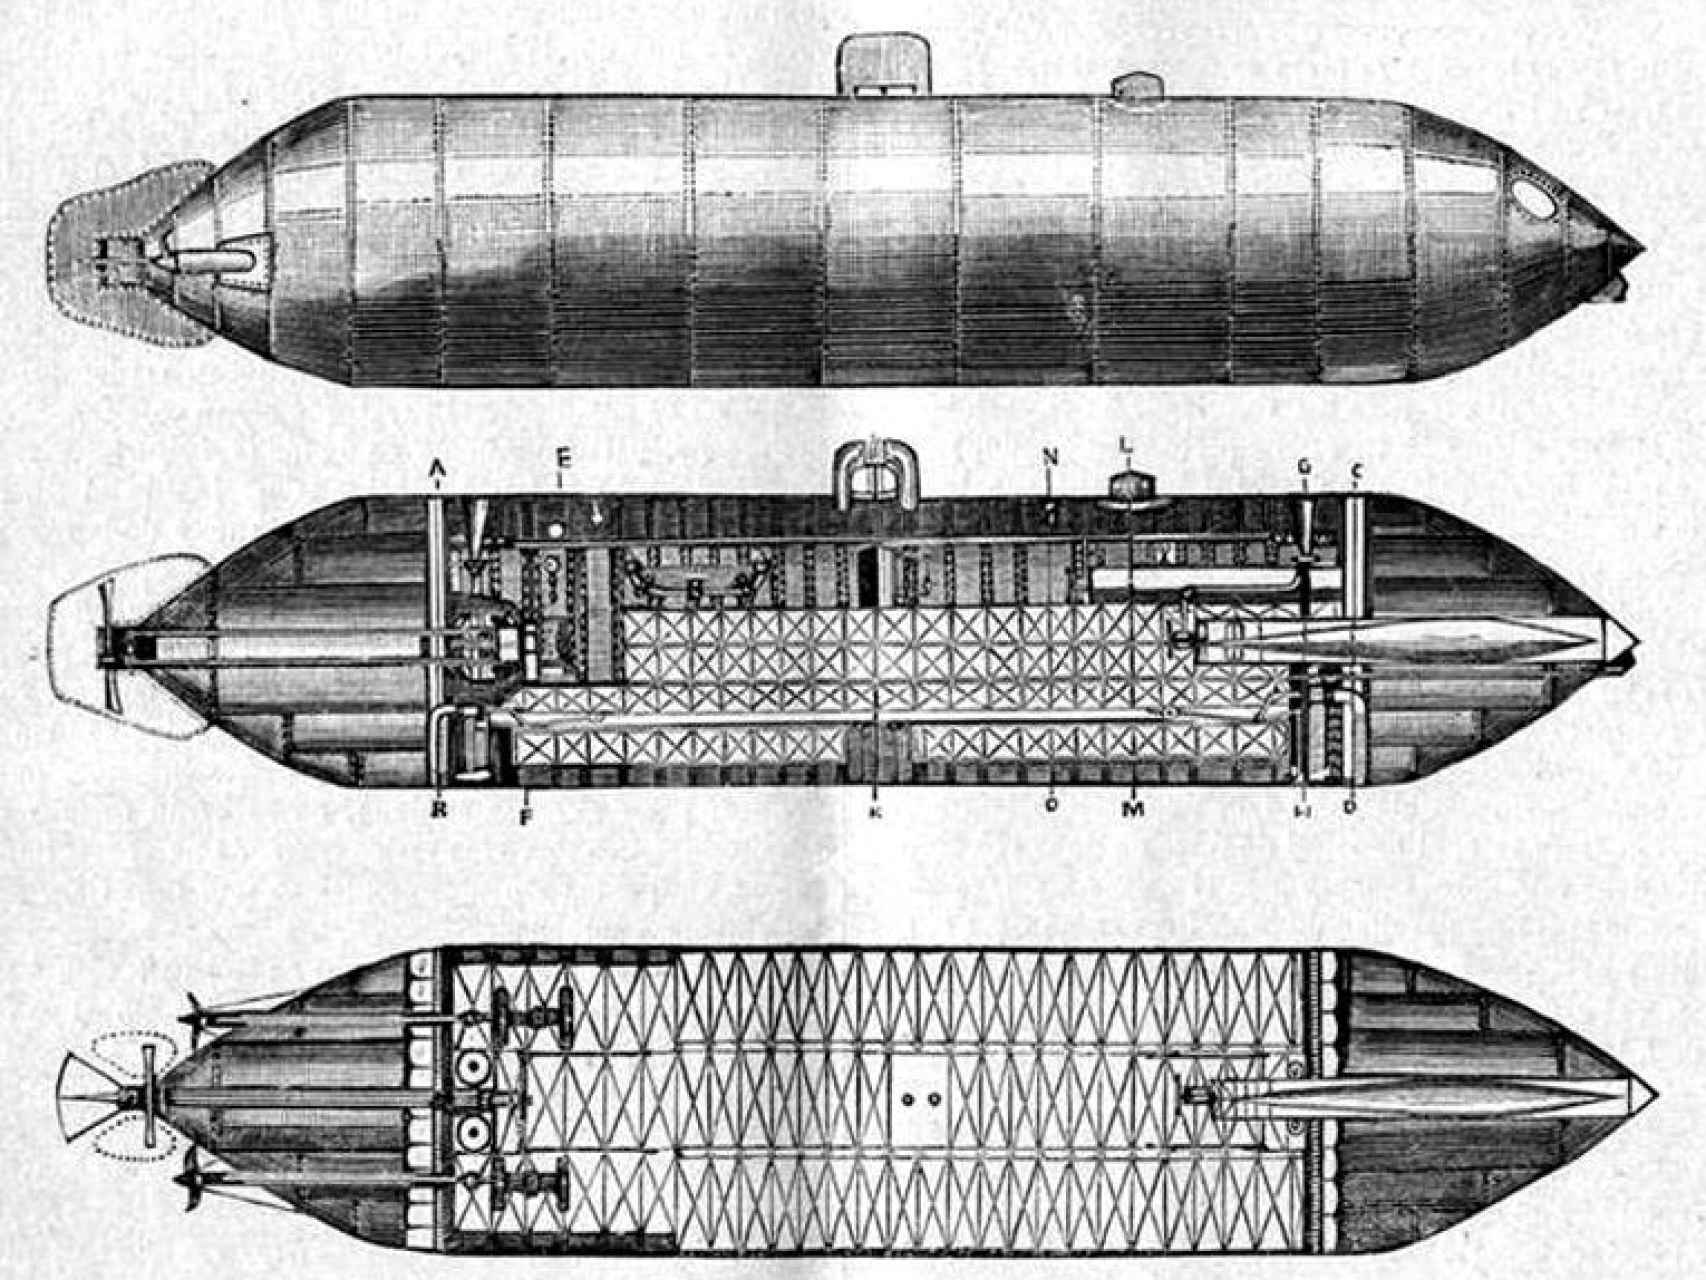 Planos del torpedero-submarino.